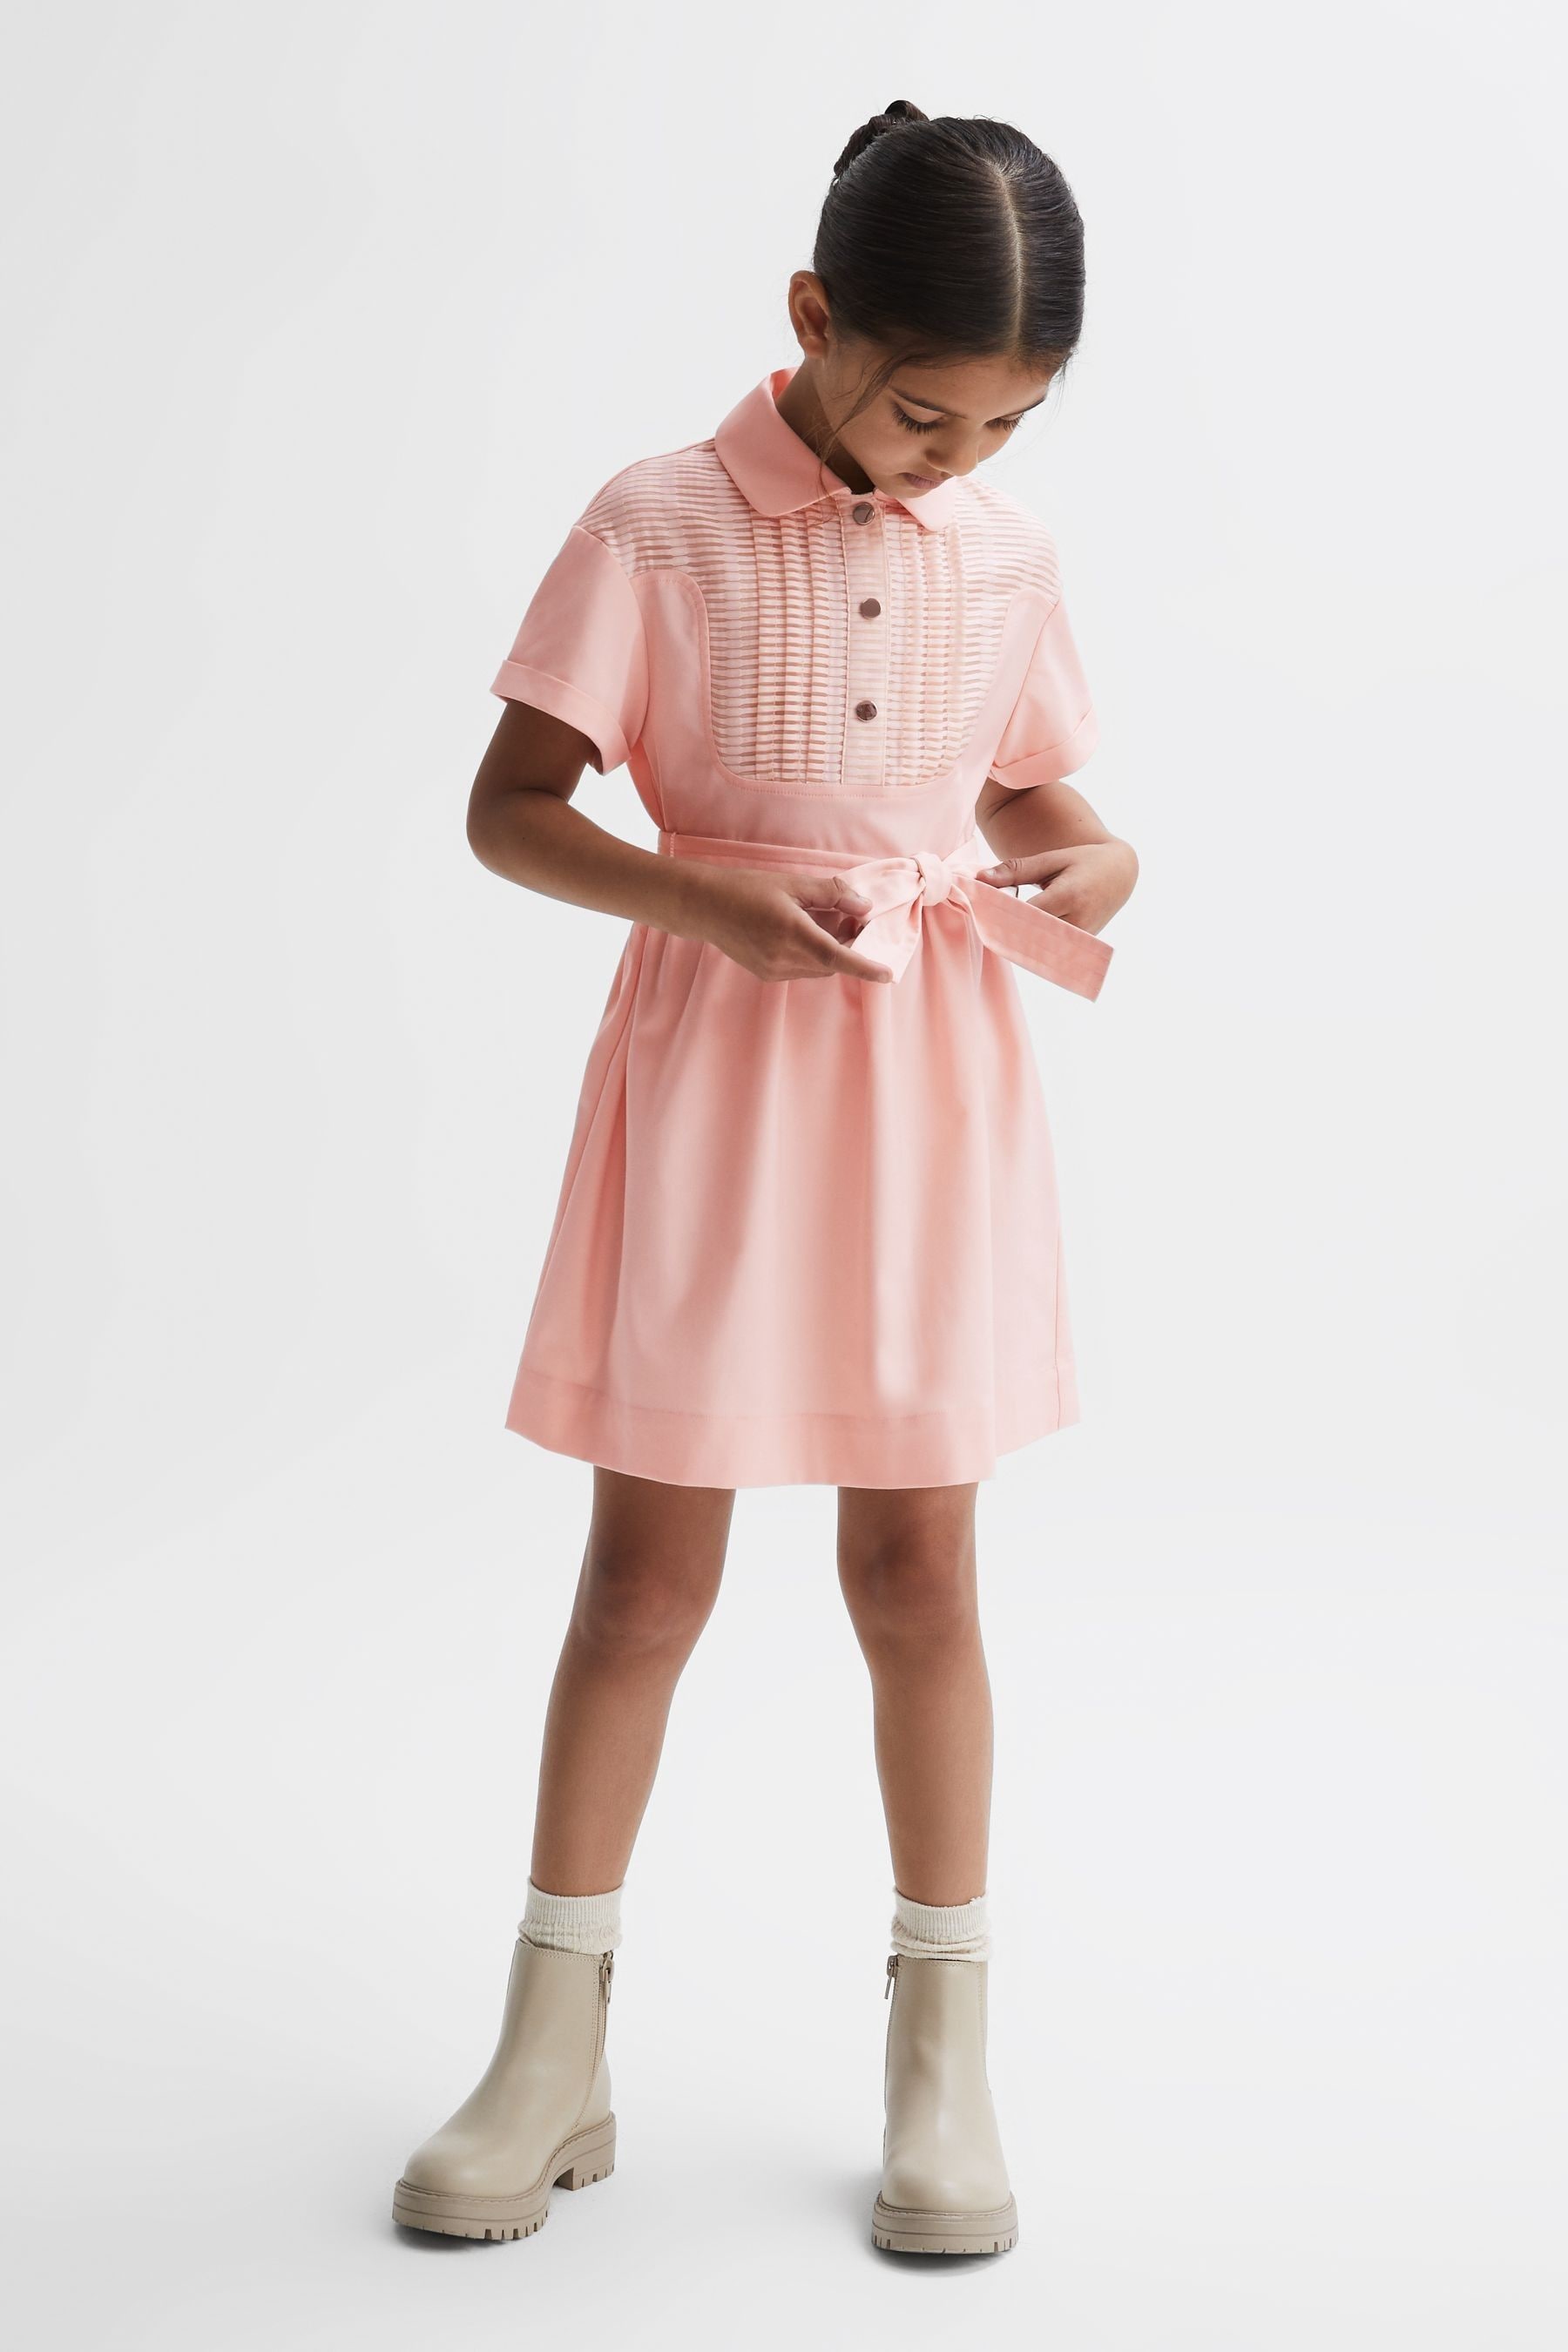 Reiss Wren - Pink Senior Collared Belted Short Sleeve Dress, Uk 13-14 Yrs